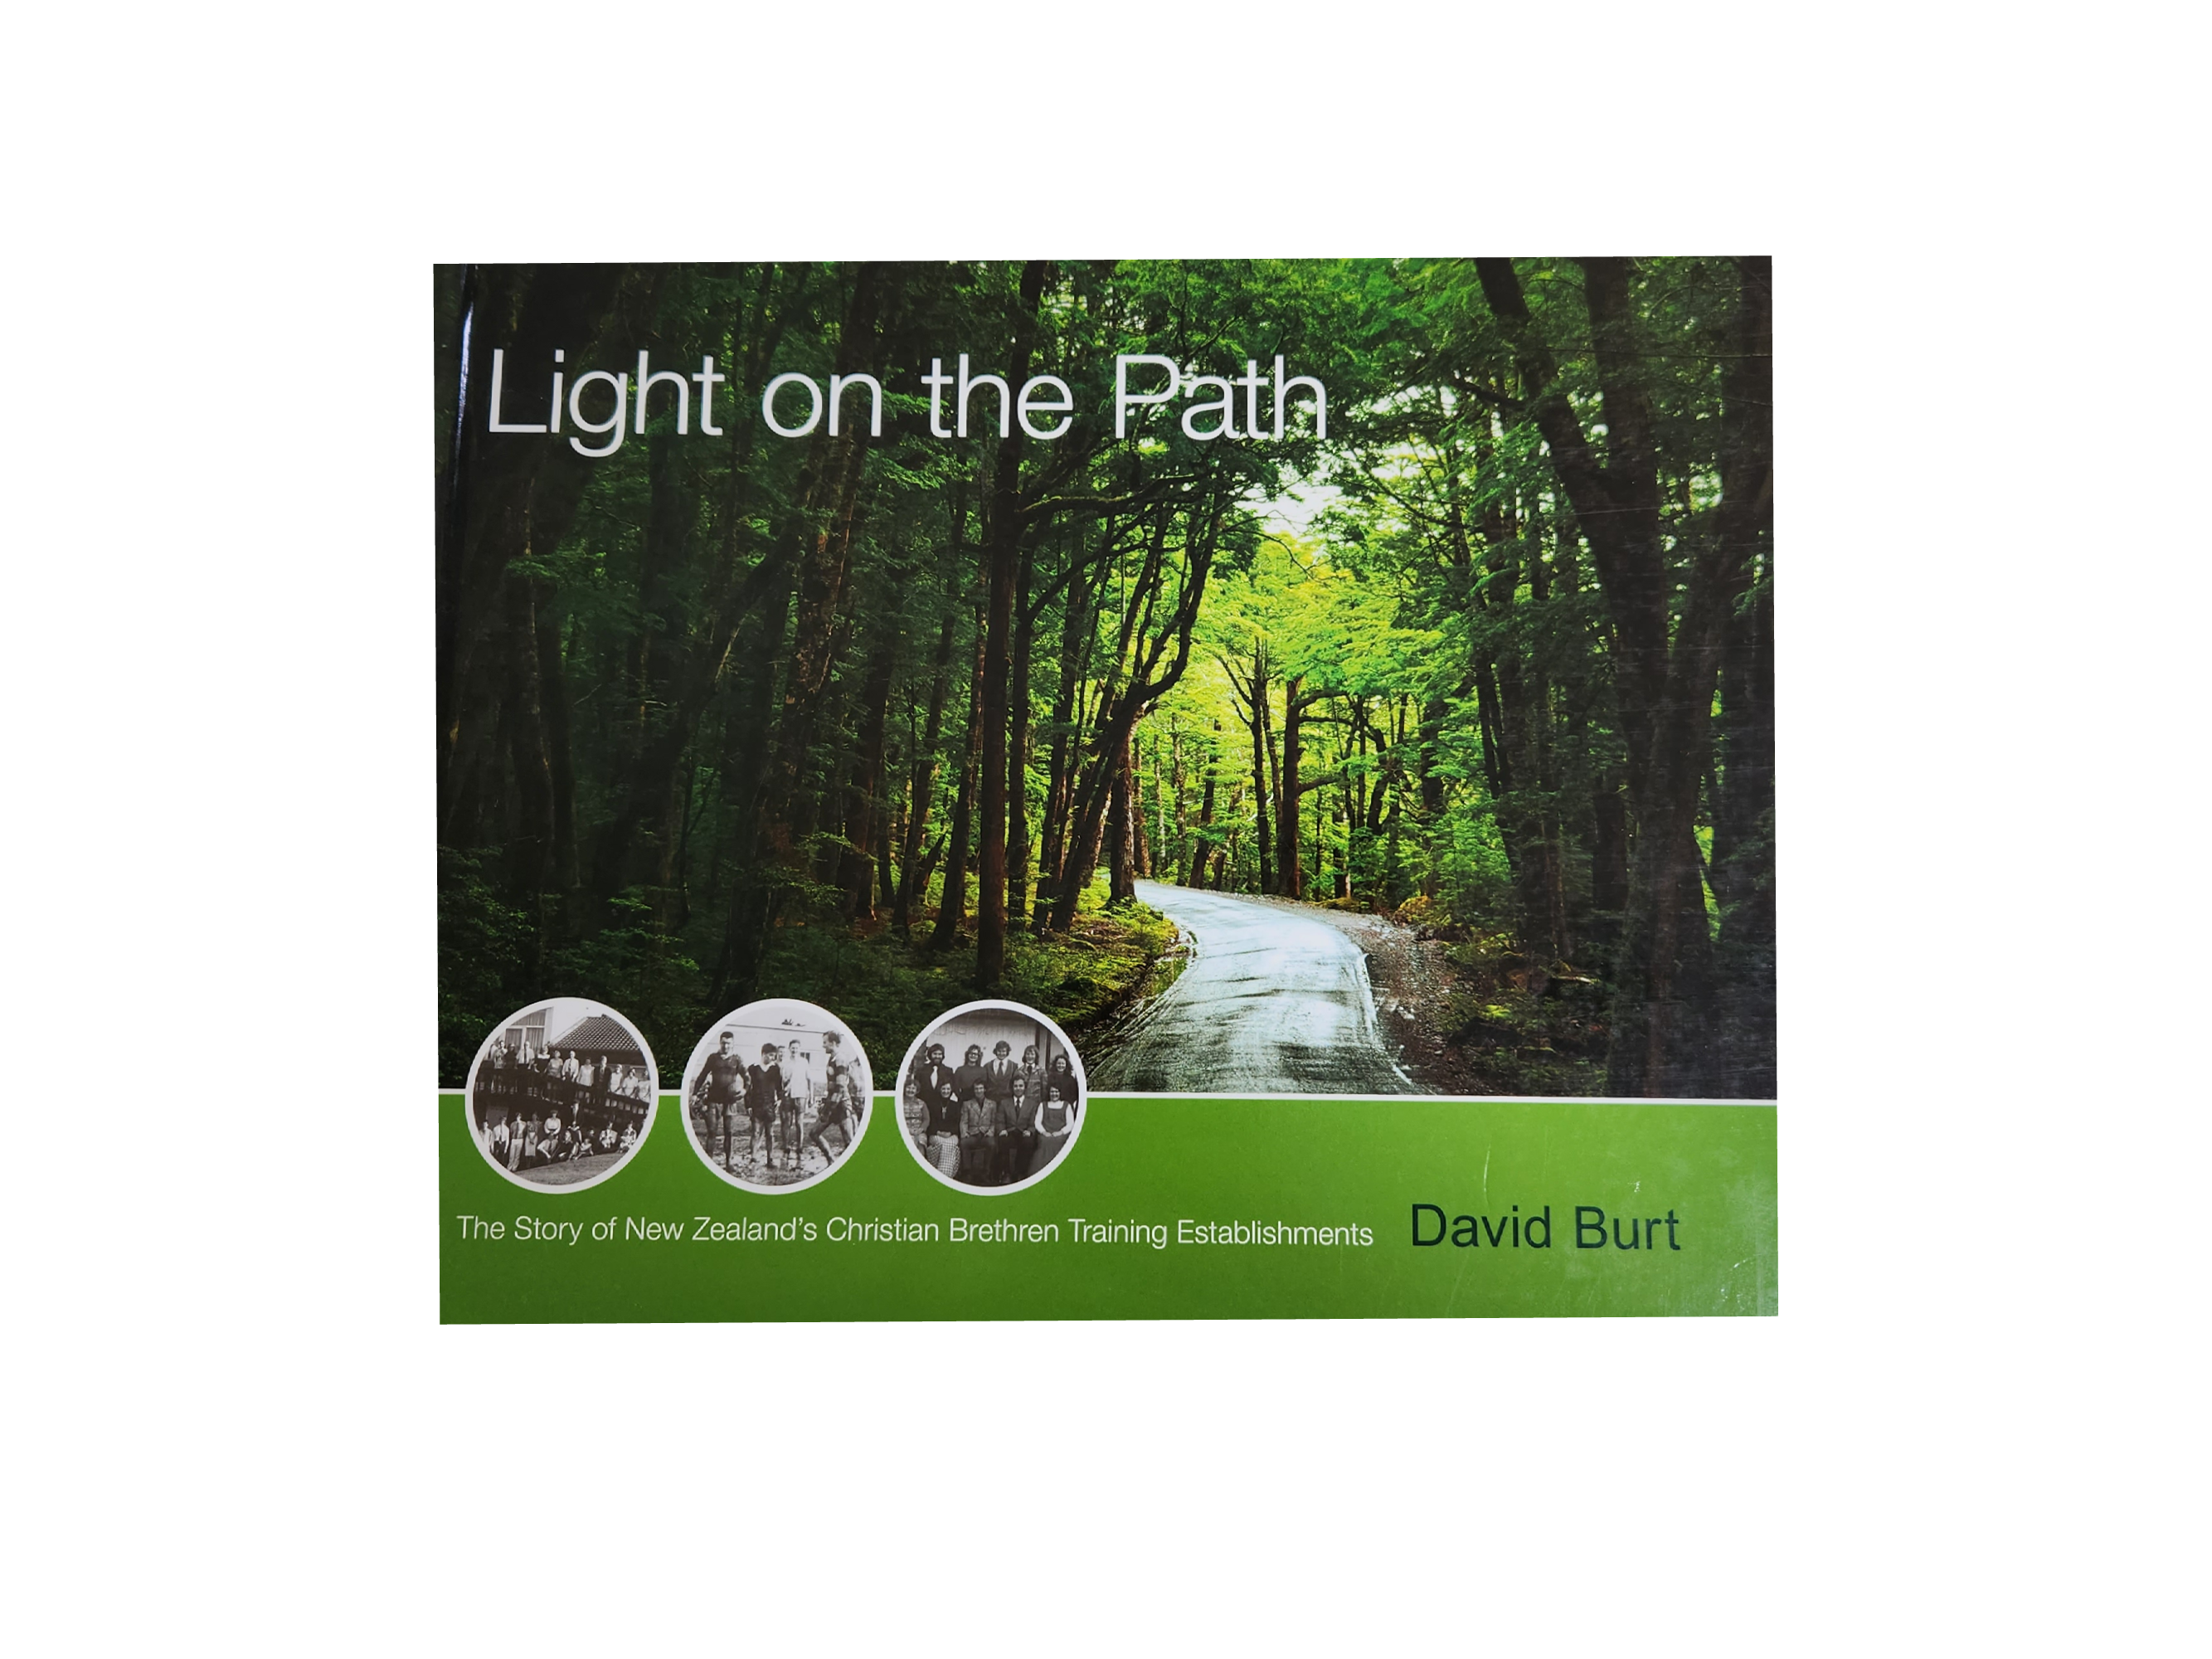 Light on the Path by David Burt